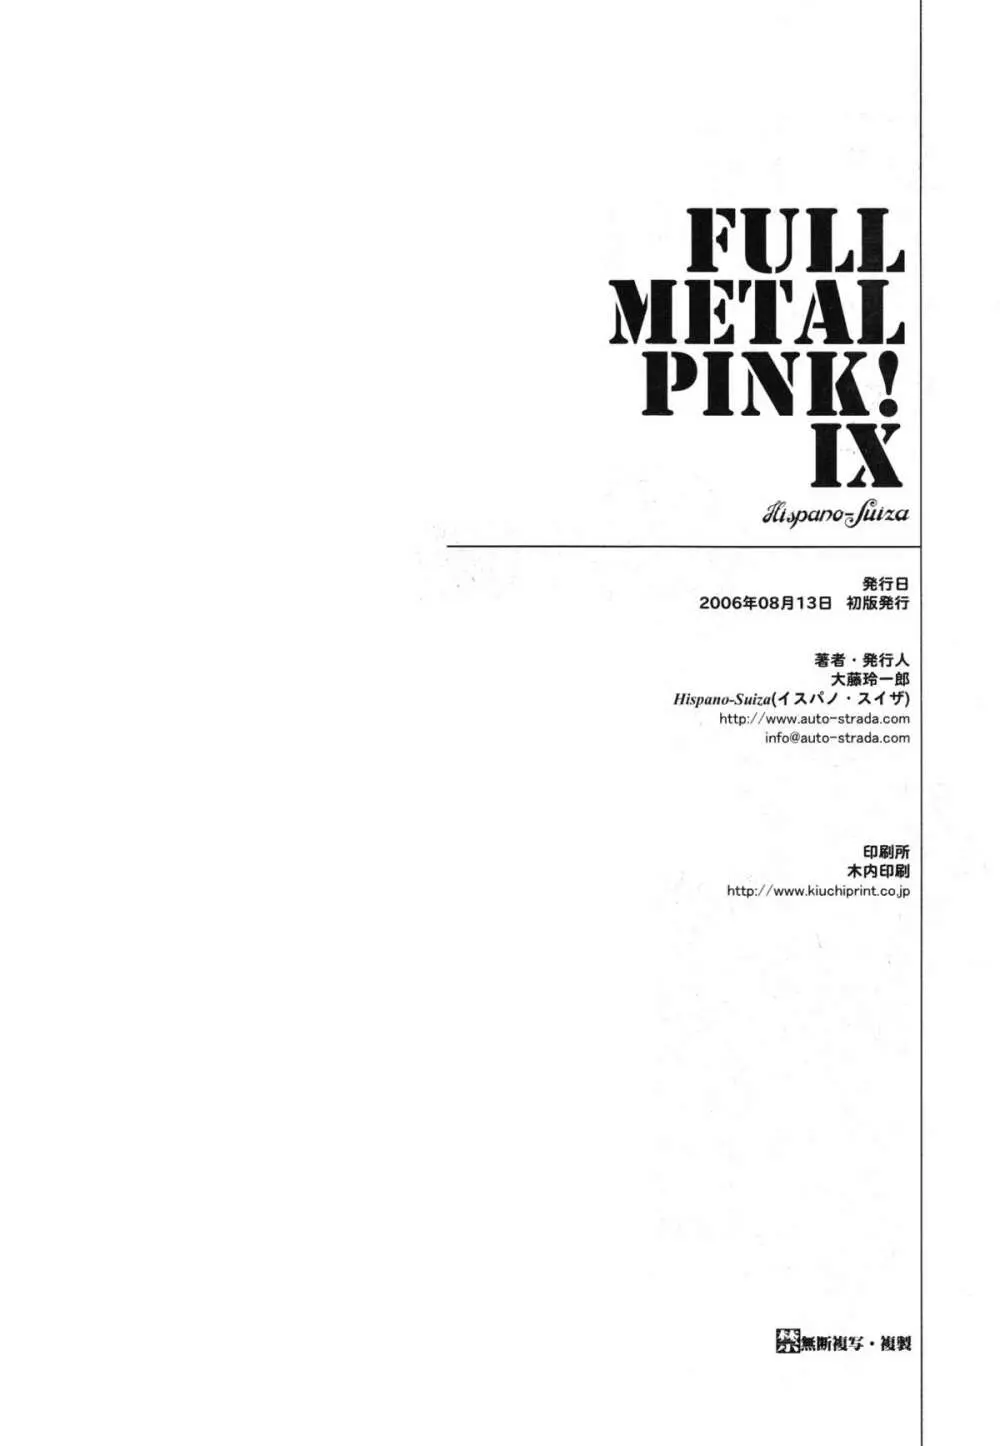 Full Metal Pink! IX 17ページ